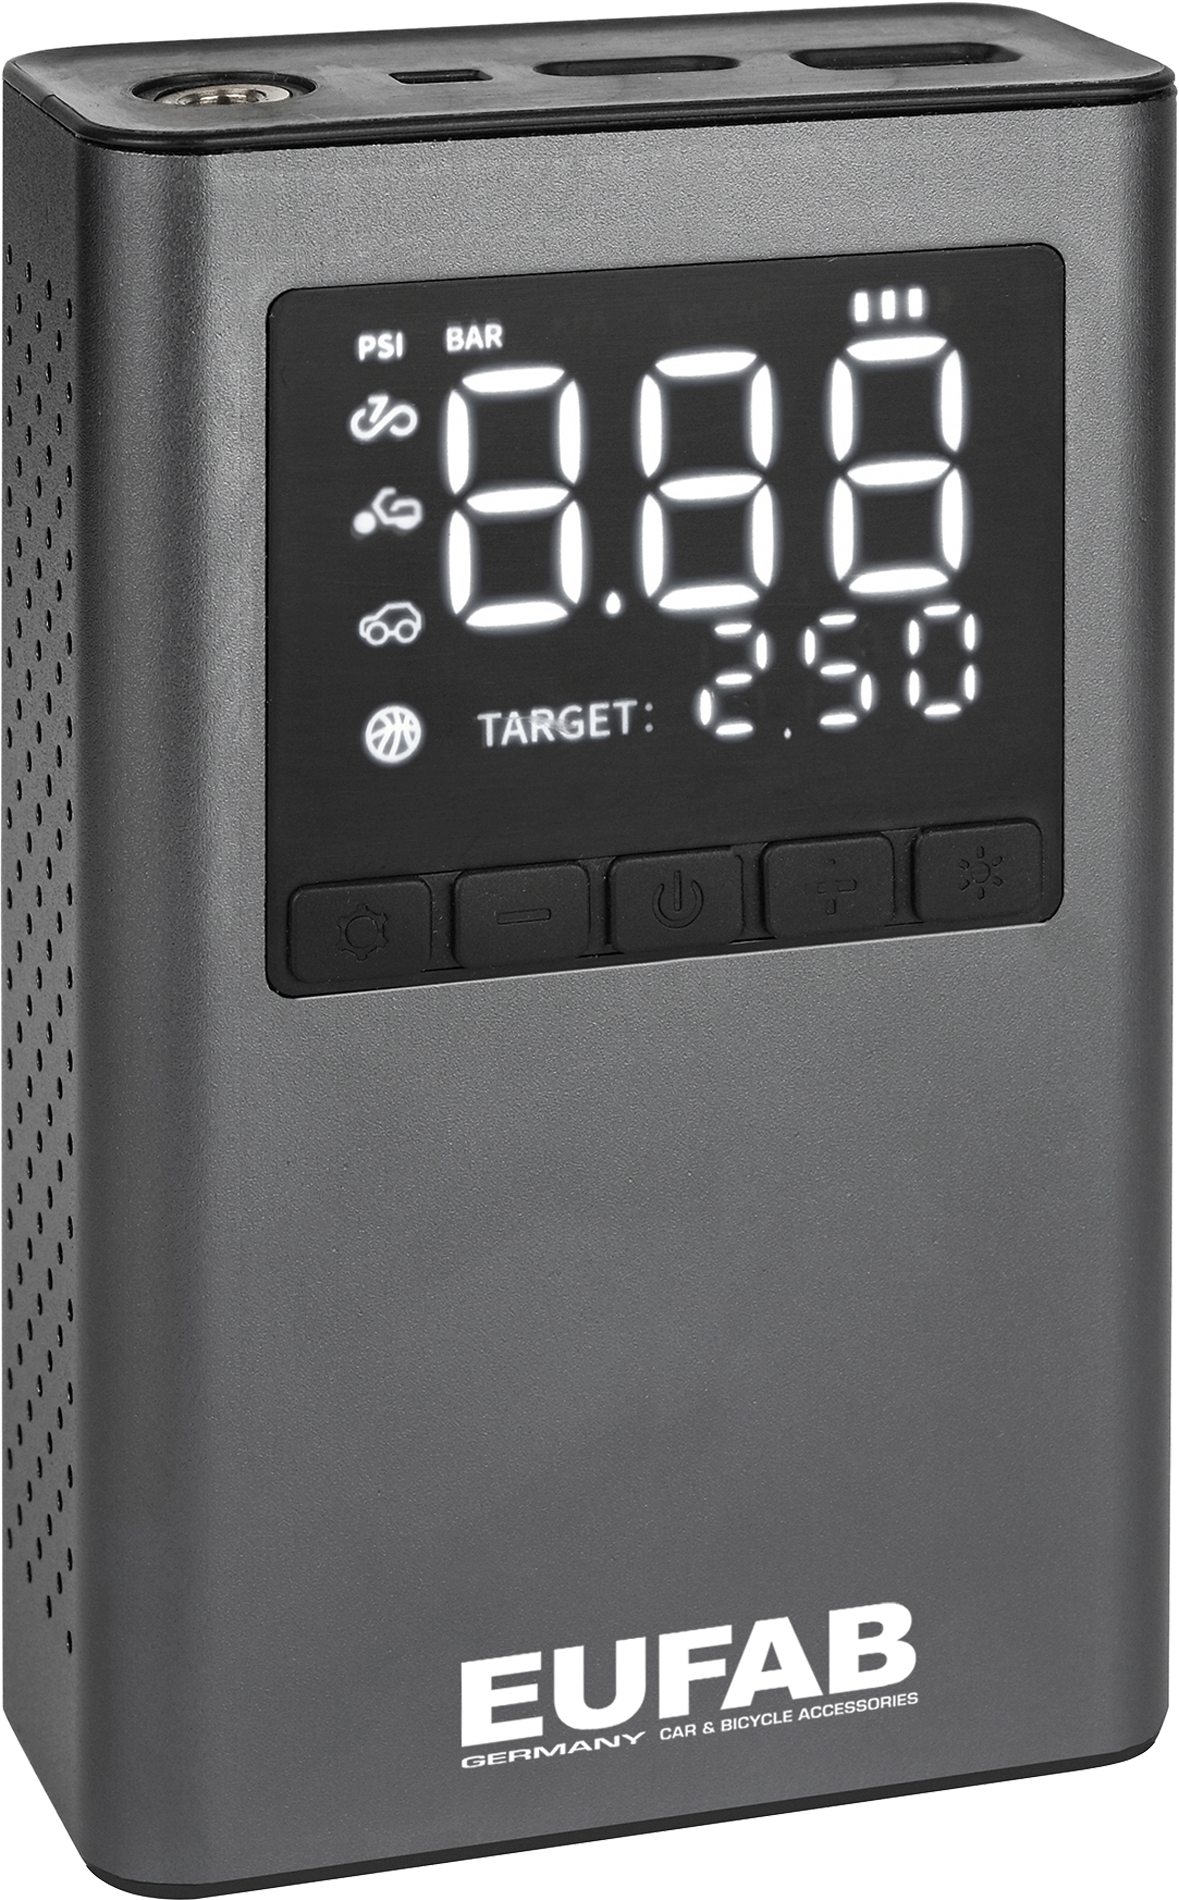 Powerbank jetzt batteriebetriebener integrierter Mini 800 Eufab Kompressor bestellen! mit mAh